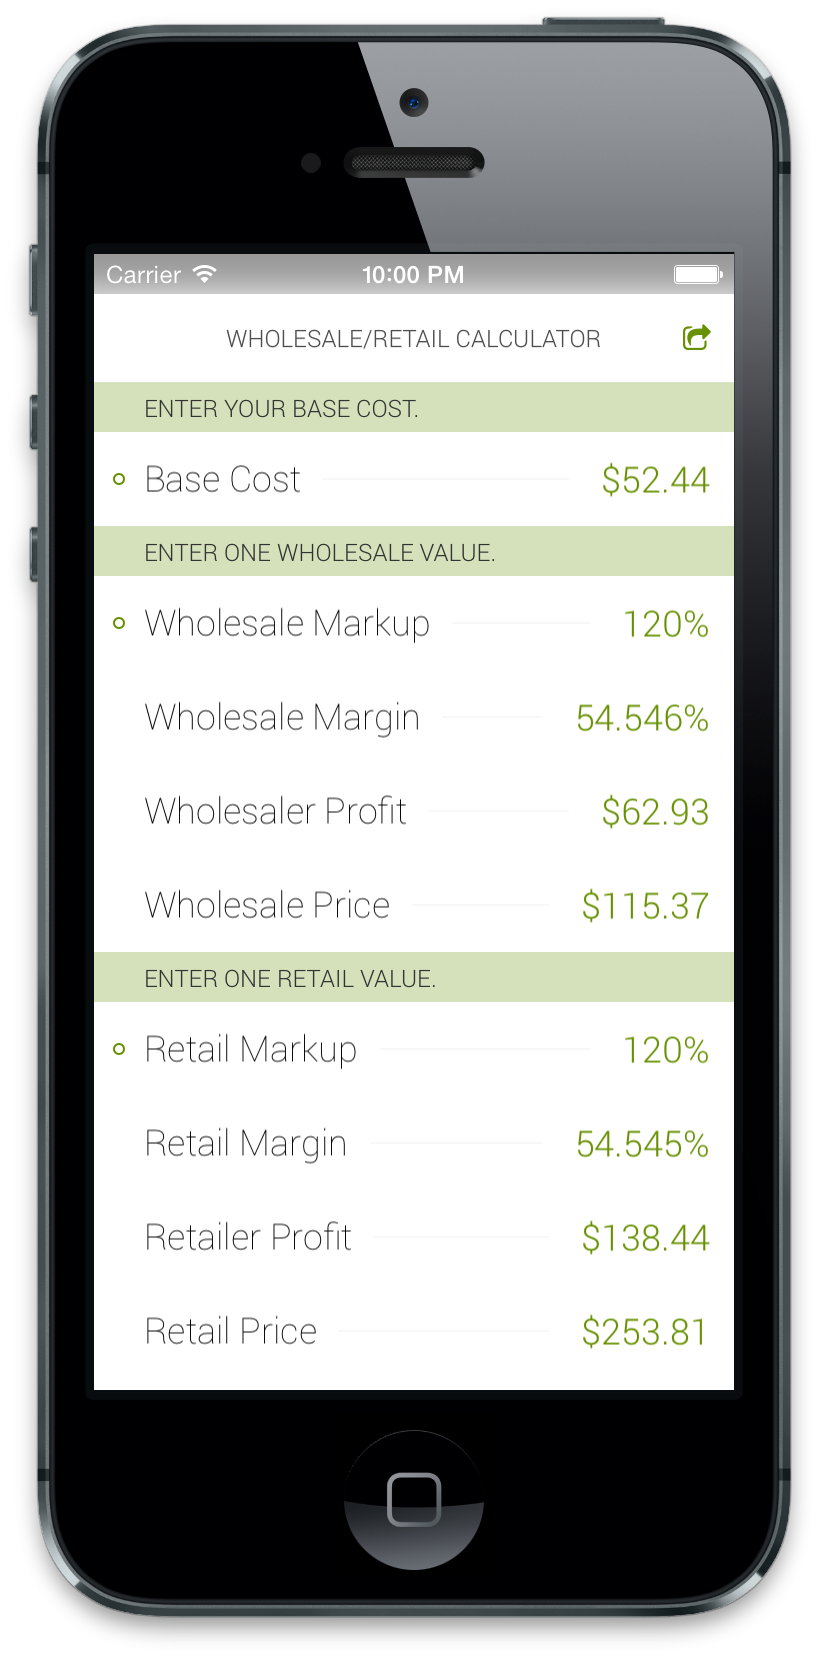 Wholesale/Retail Calculator App Screenshot